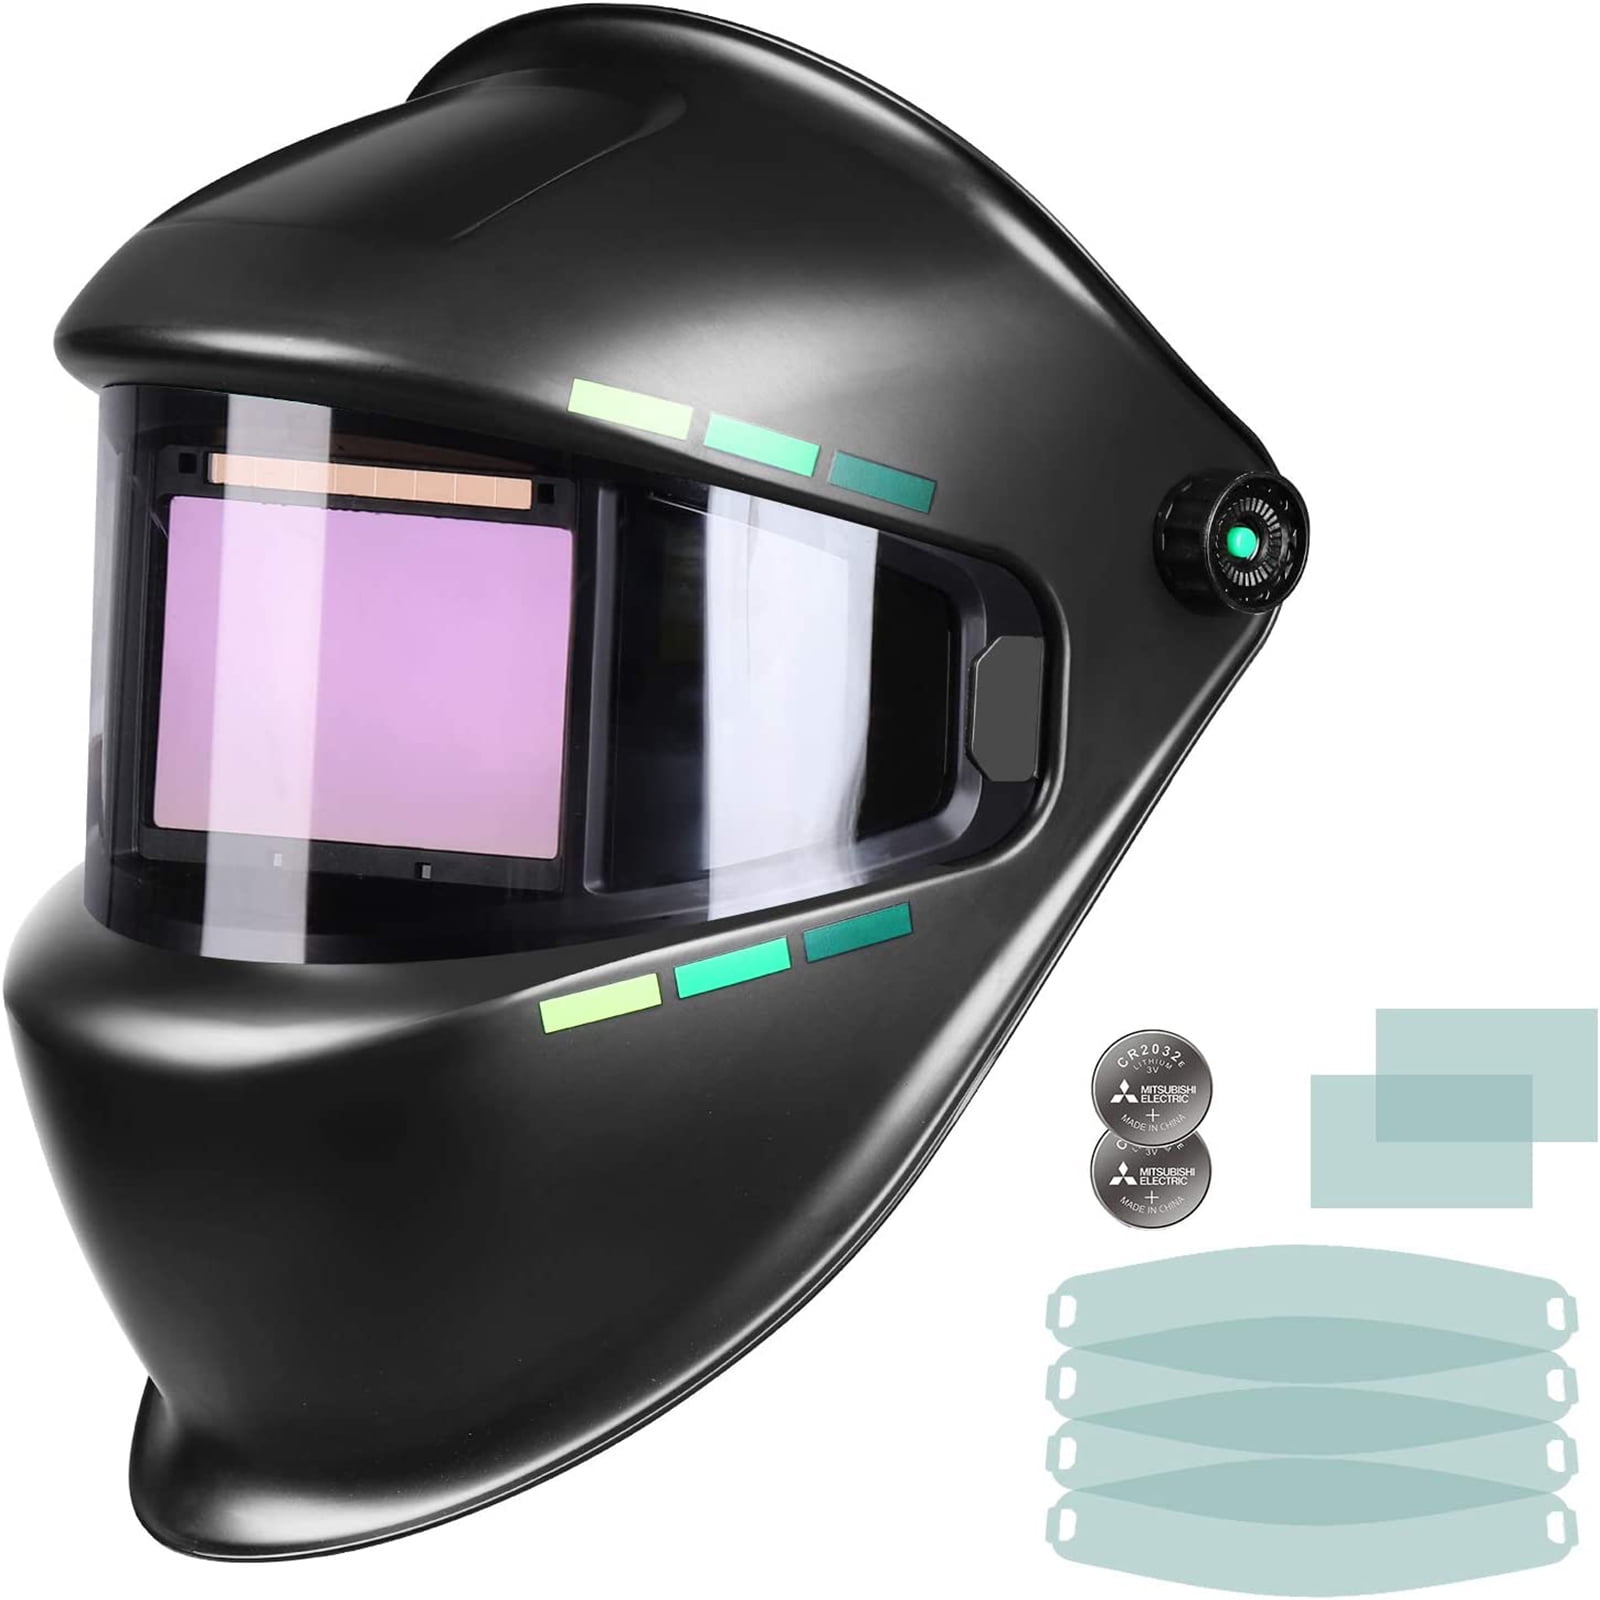 Deko Pro Solar Powered Auto Darkening Welding Helmet with Adjustable Shade  4/9-13 - Stateside Equipment Sales